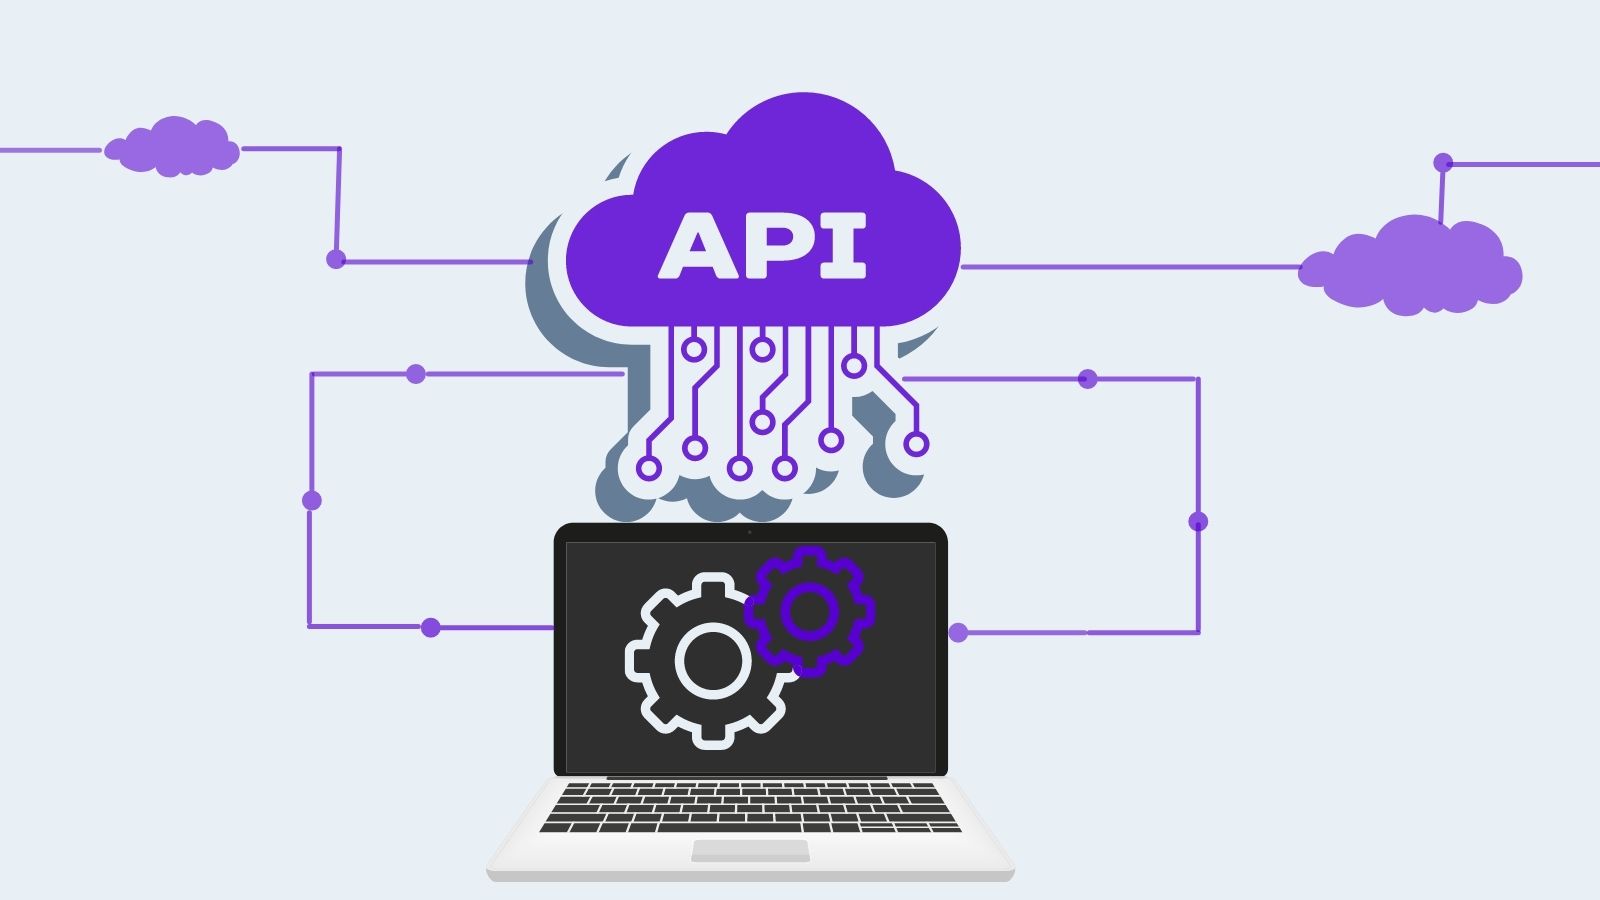 What is an API? On agilitycms.com